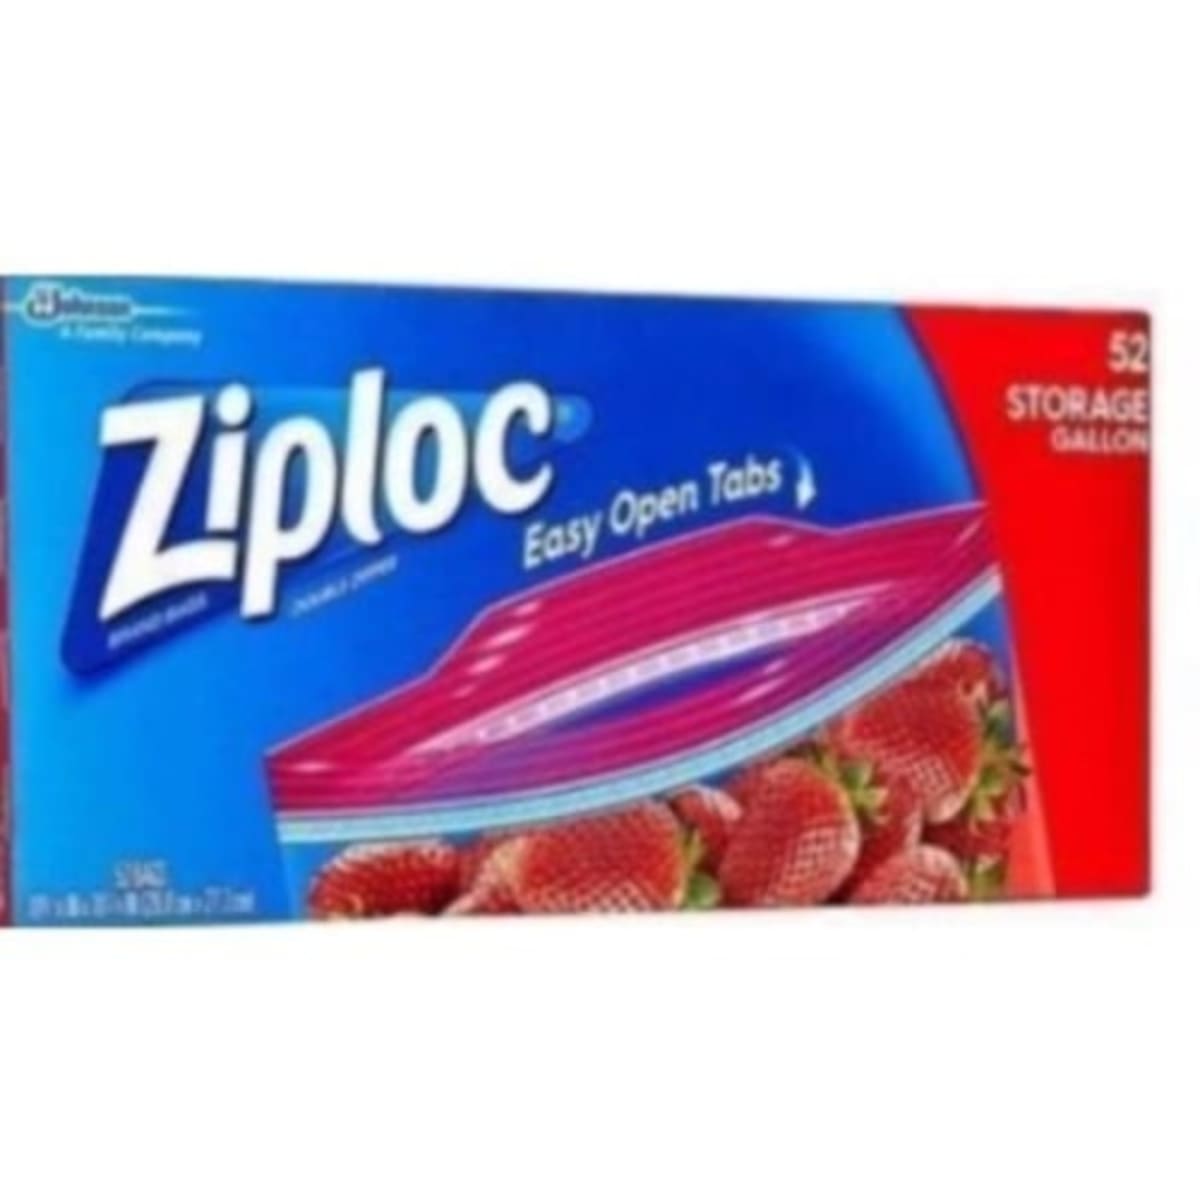 Ziploc Bags As Low As 220 At Publix  Plus Get A Deal On Ziploc Slider  Bags  iHeartPublix